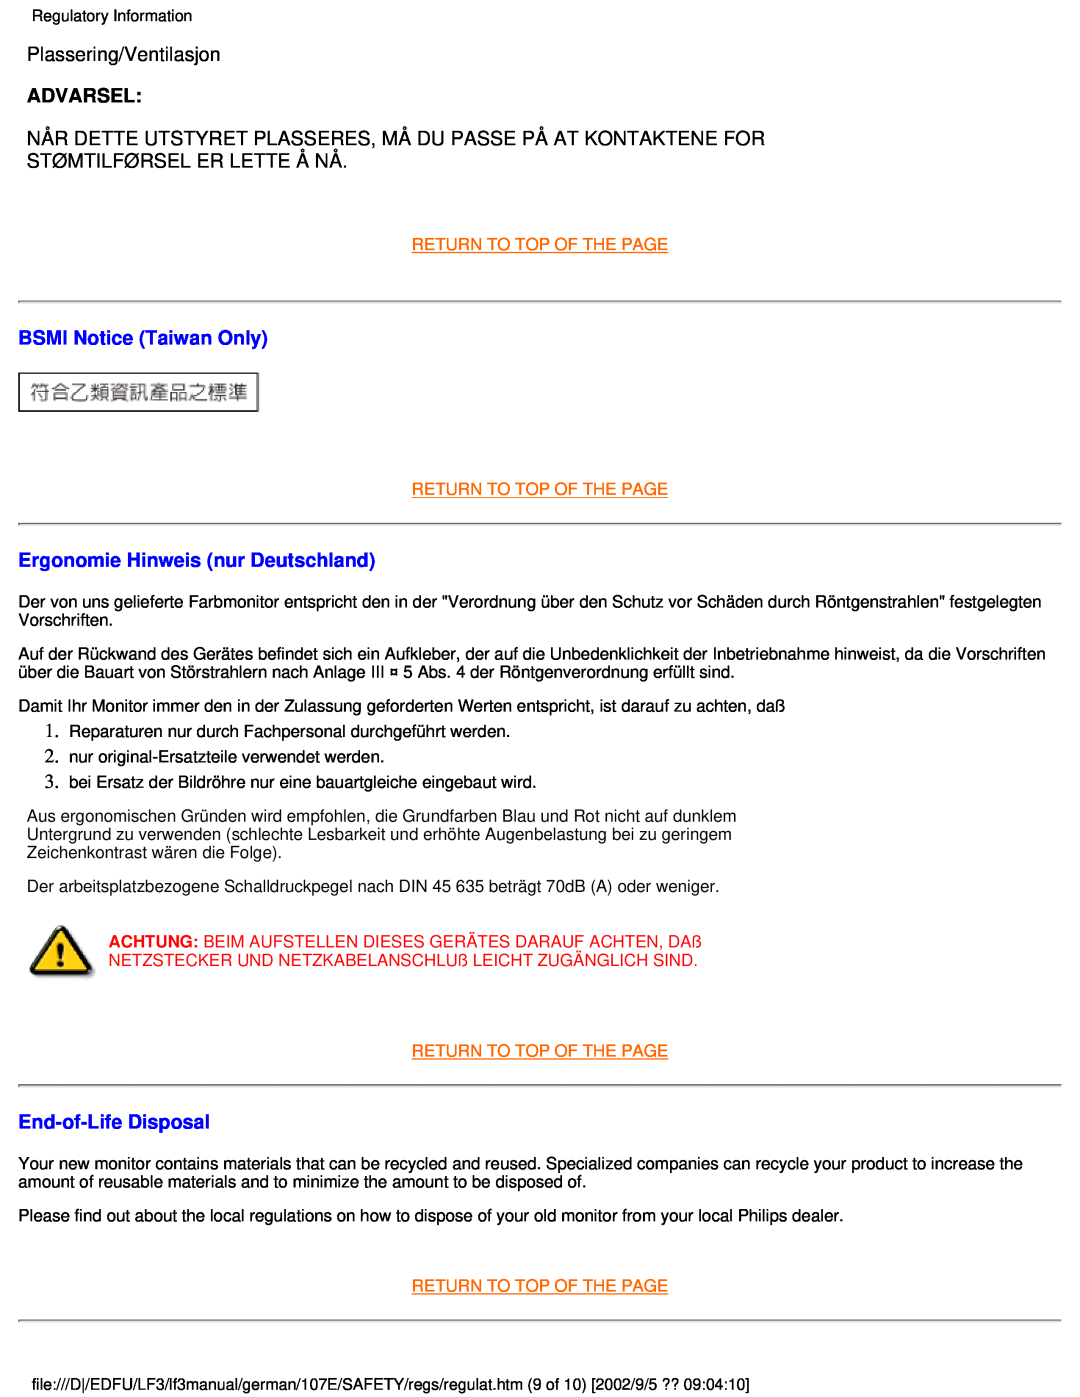 Philips 107E user manual Advarsel, BSMI Notice Taiwan Only, Ergonomie Hinweis nur Deutschland, End-of-Life Disposal 